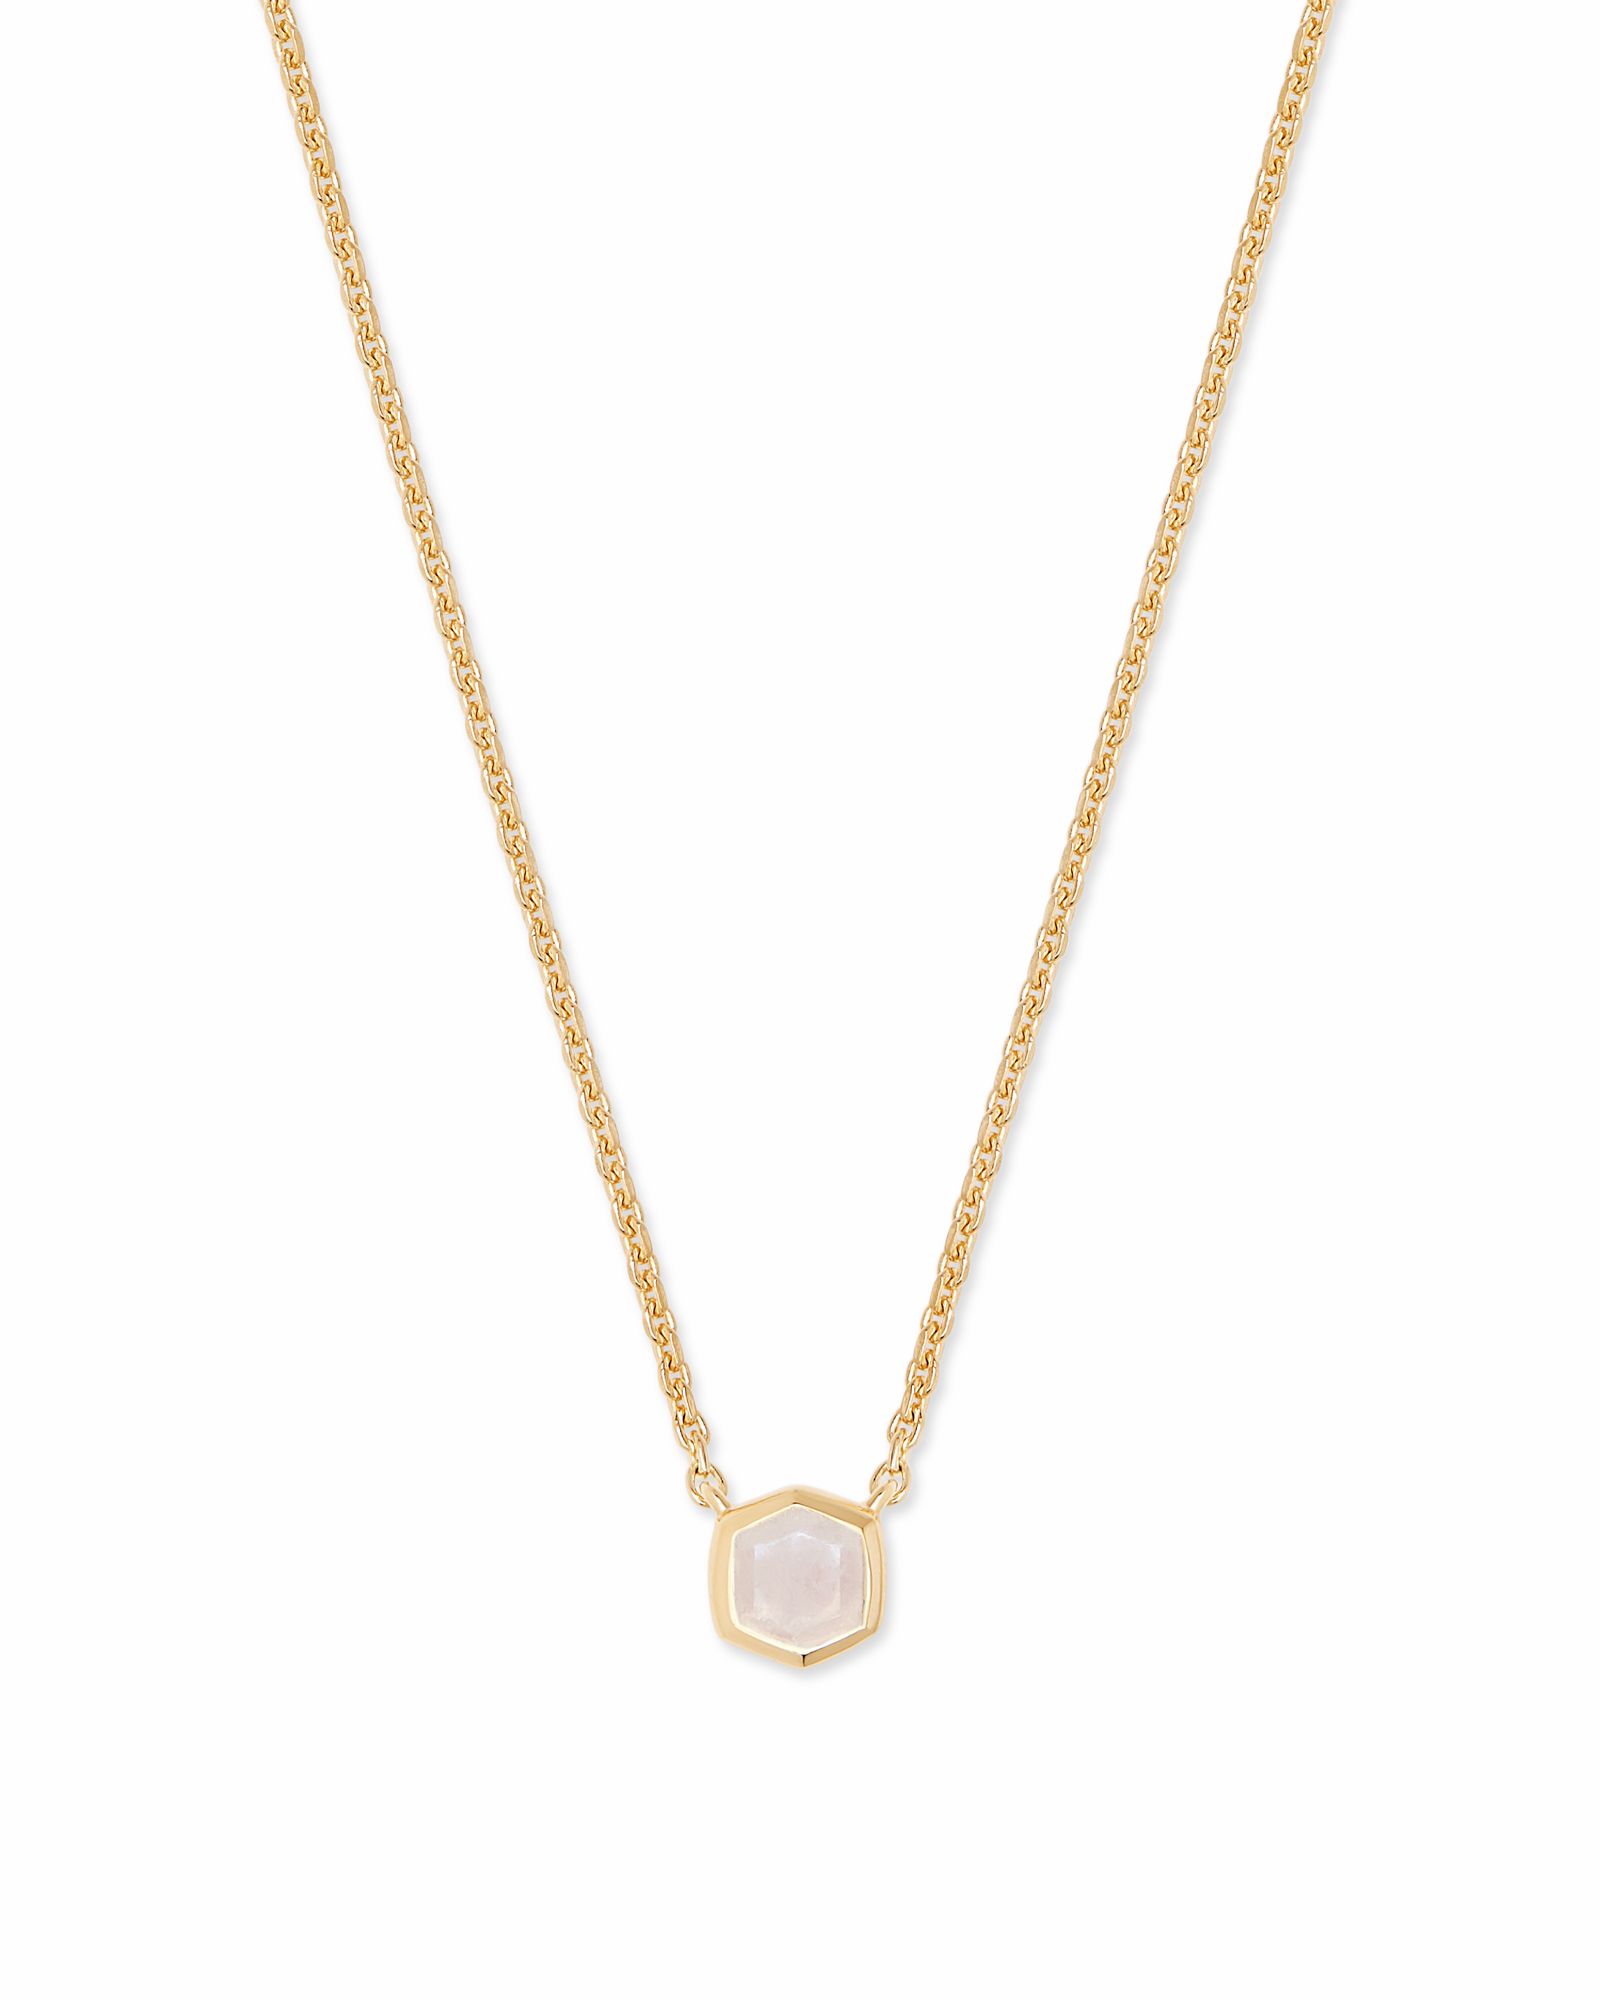 Davie 18k Gold Vermeil Pendant Necklace in Rainbow Moonstone | Kendra Scott | Kendra Scott